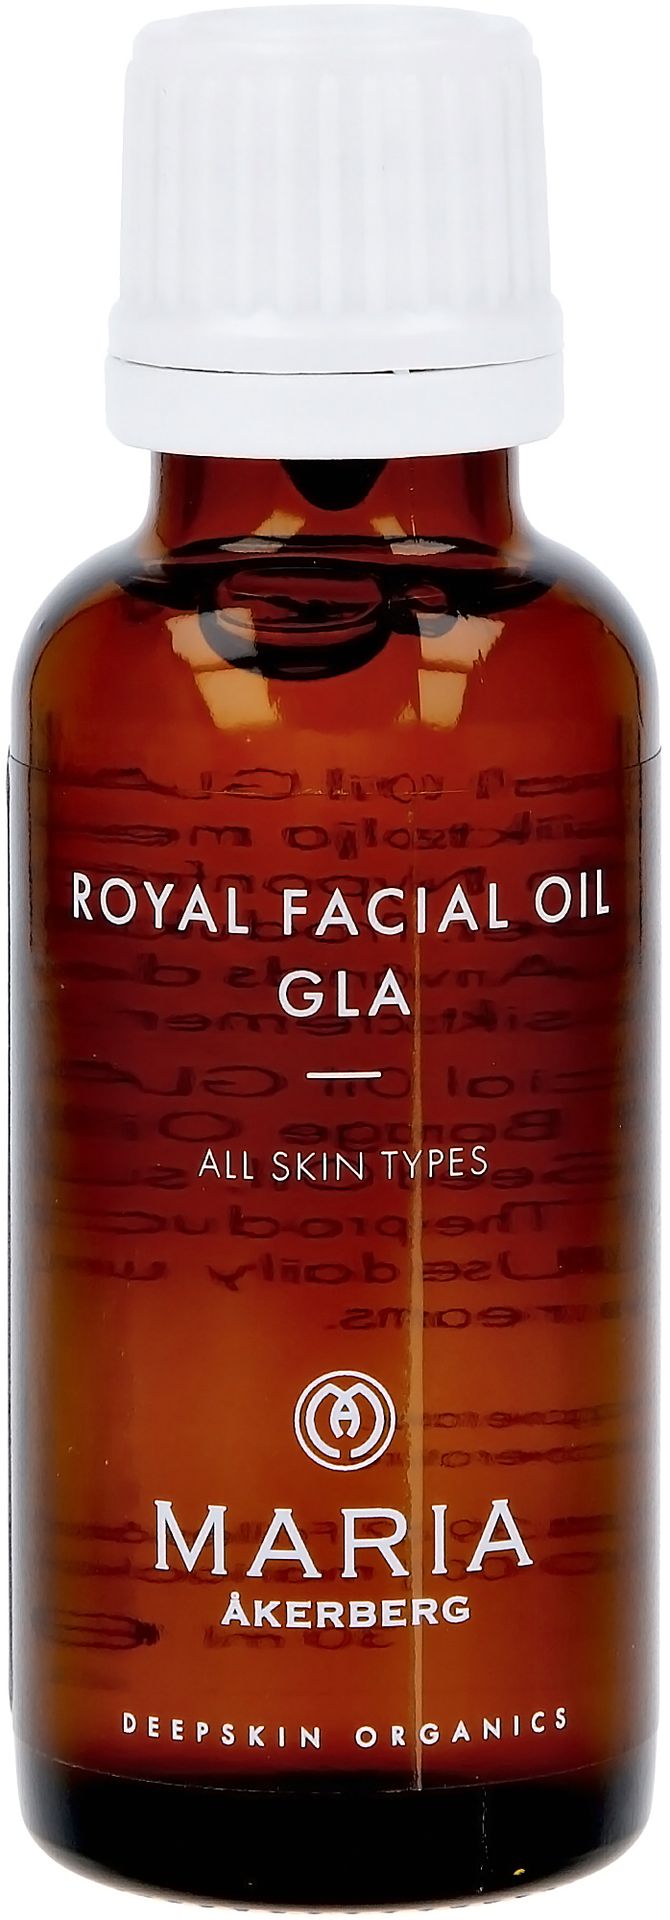 Maria Åkerberg Royal Facial Oil Gla (30ml)